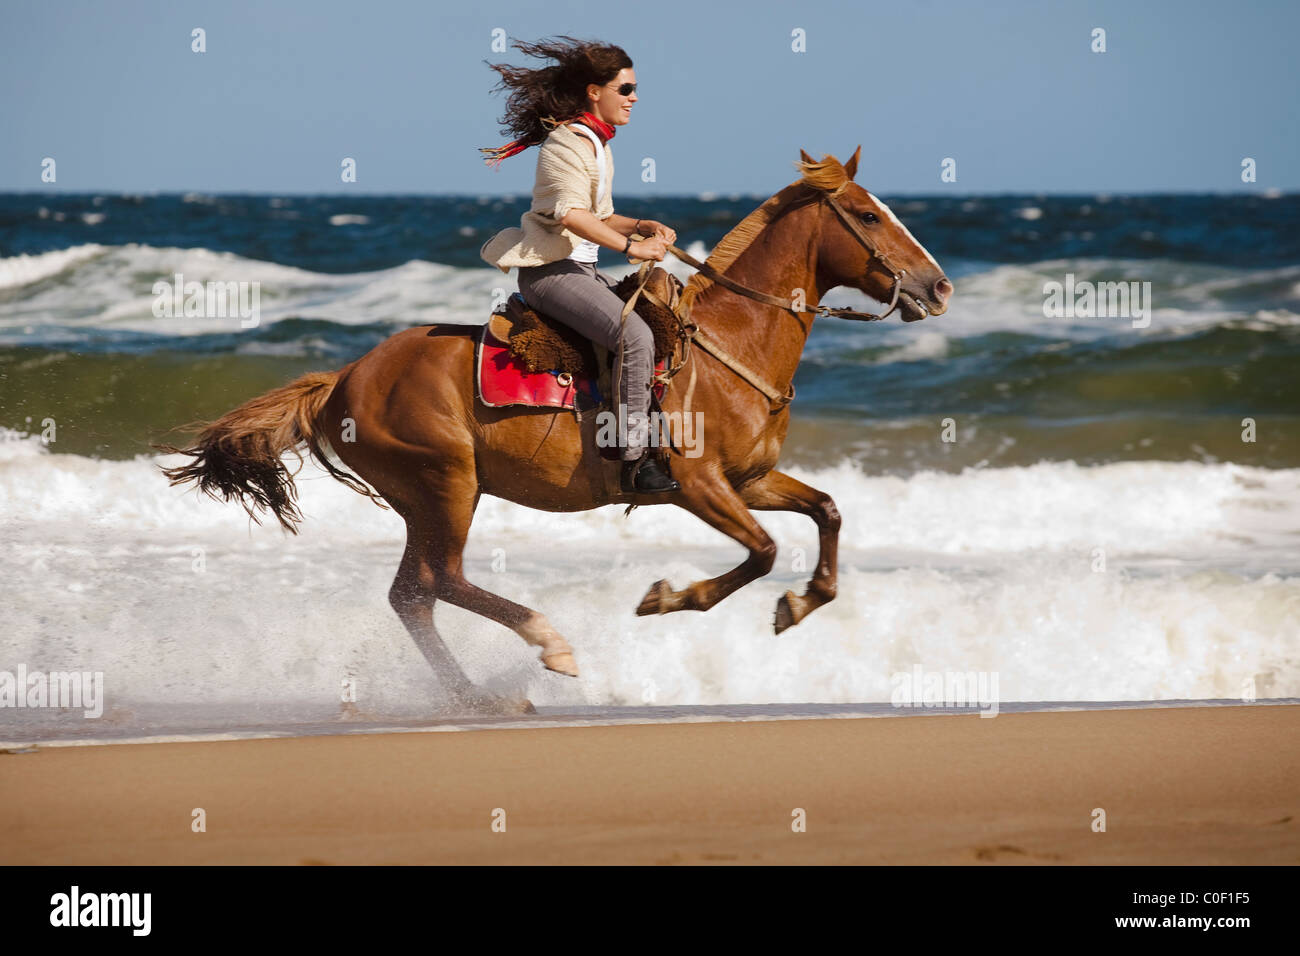 A woman rides a horse at the beach in Punta del Este, Uruguay. Stock Photo